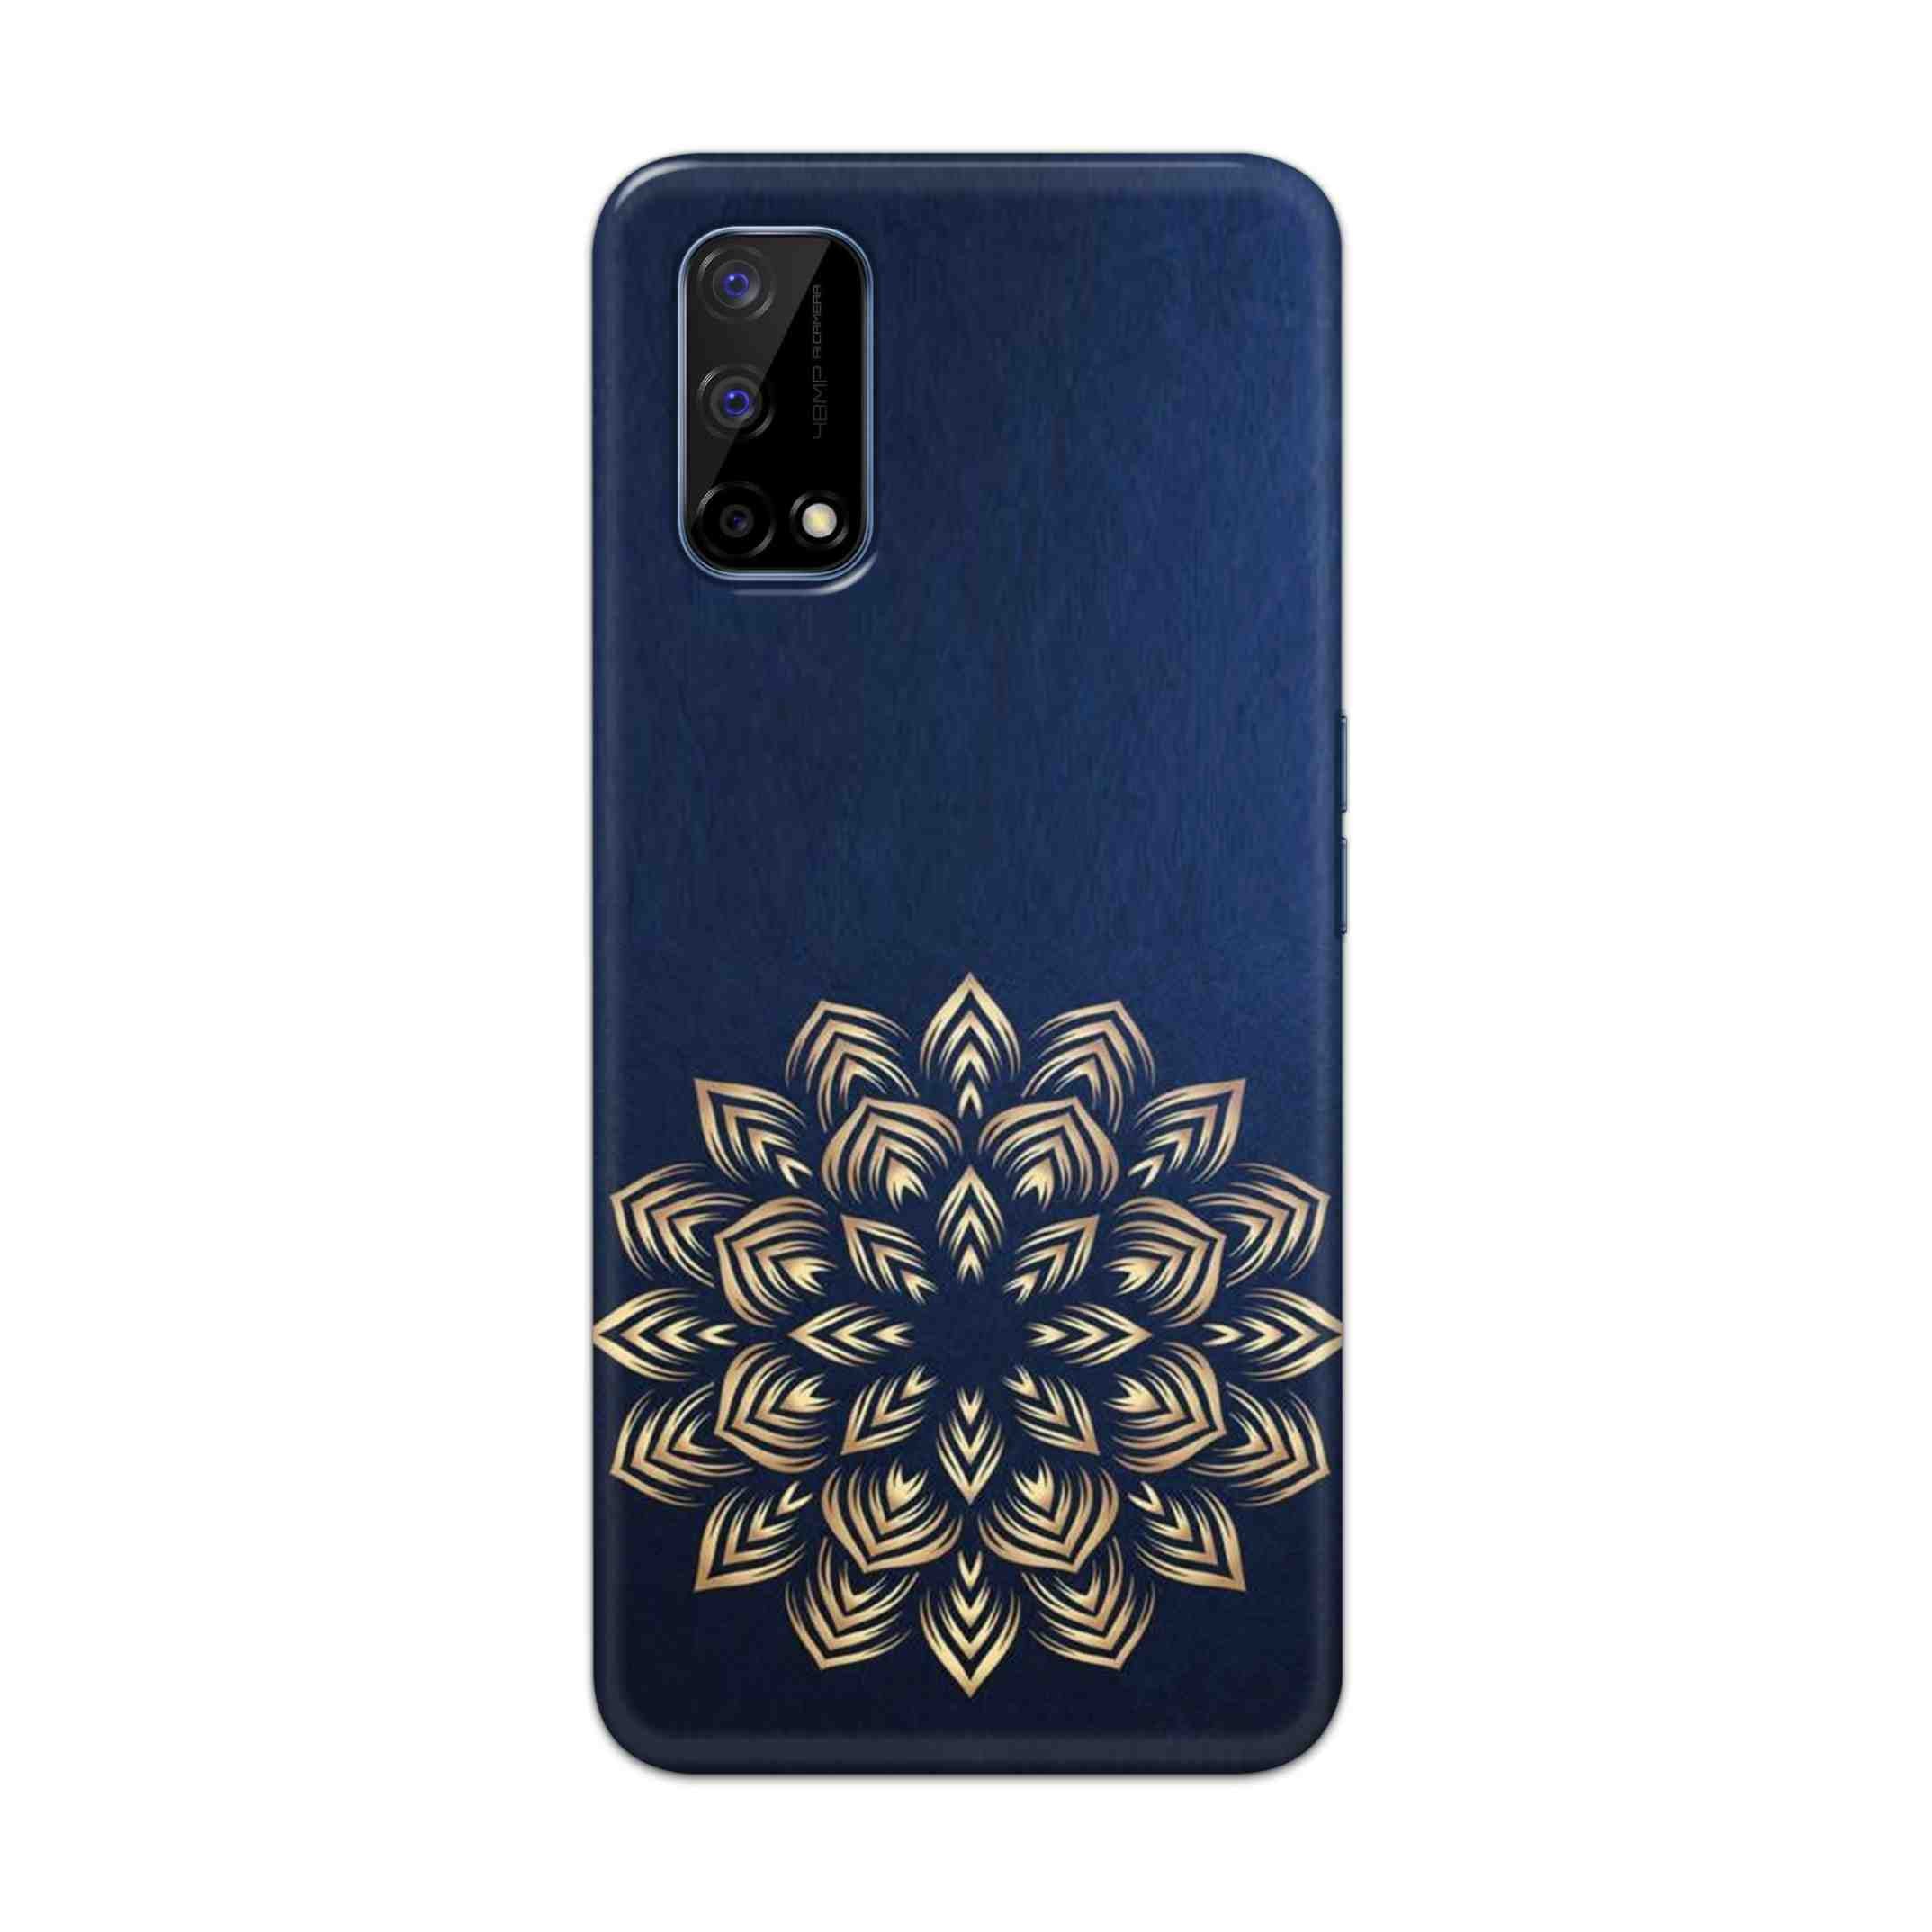 Buy Heart Mandala Hard Back Mobile Phone Case Cover For Realme Narzo 30 Pro Online